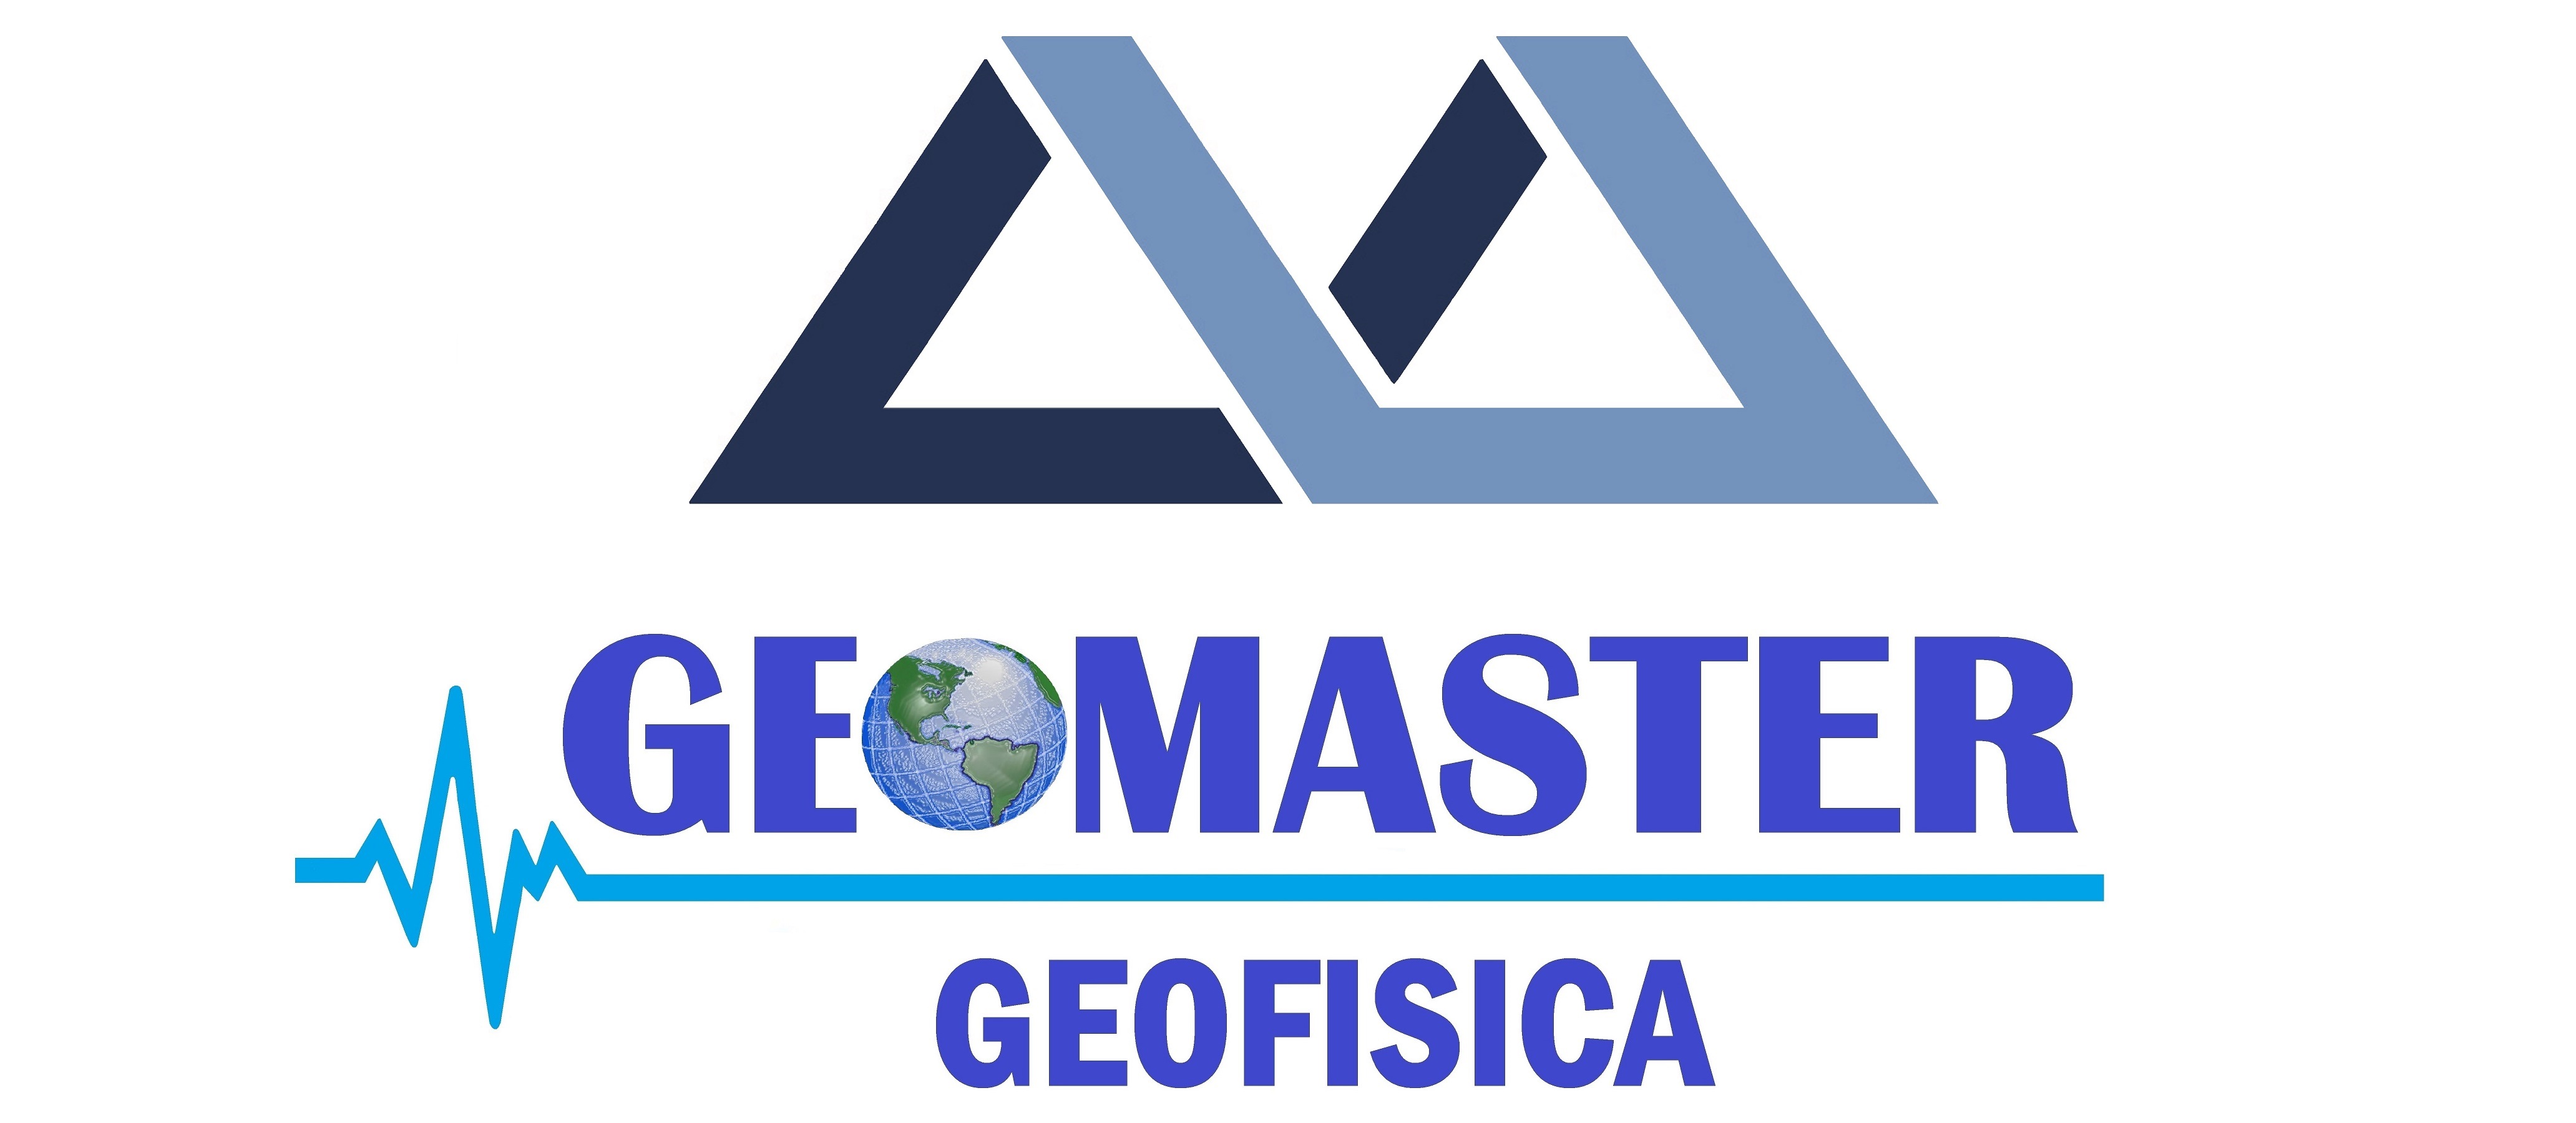 GeoMaster Geofisica